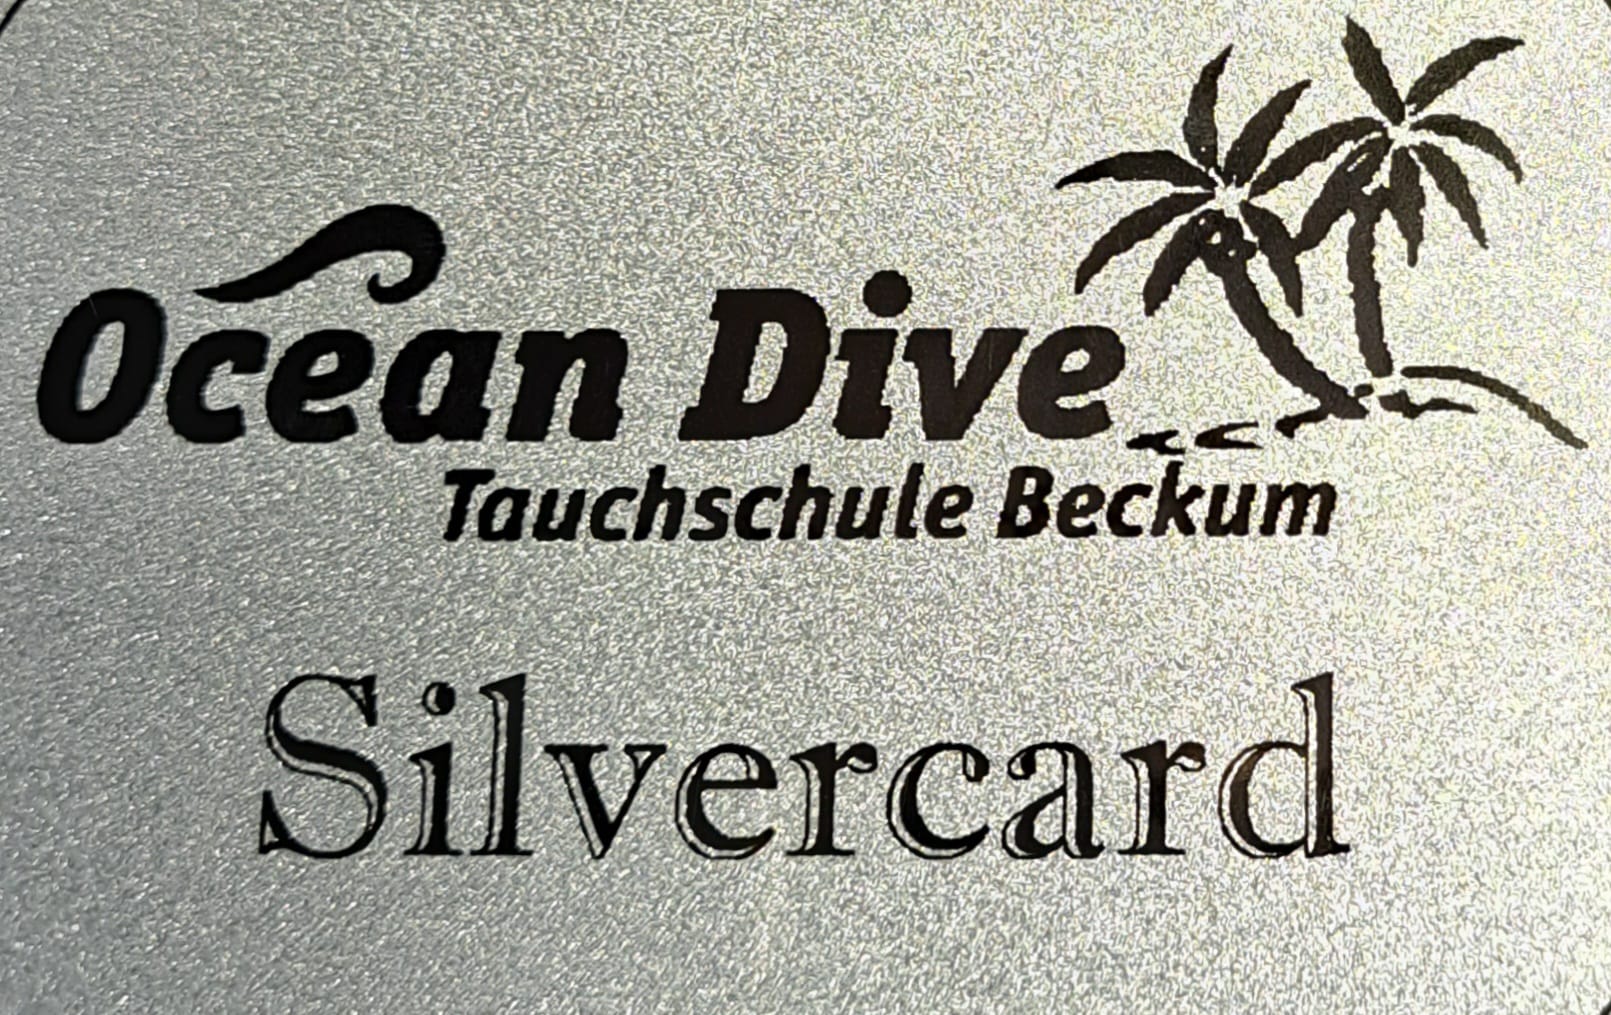 silvercard